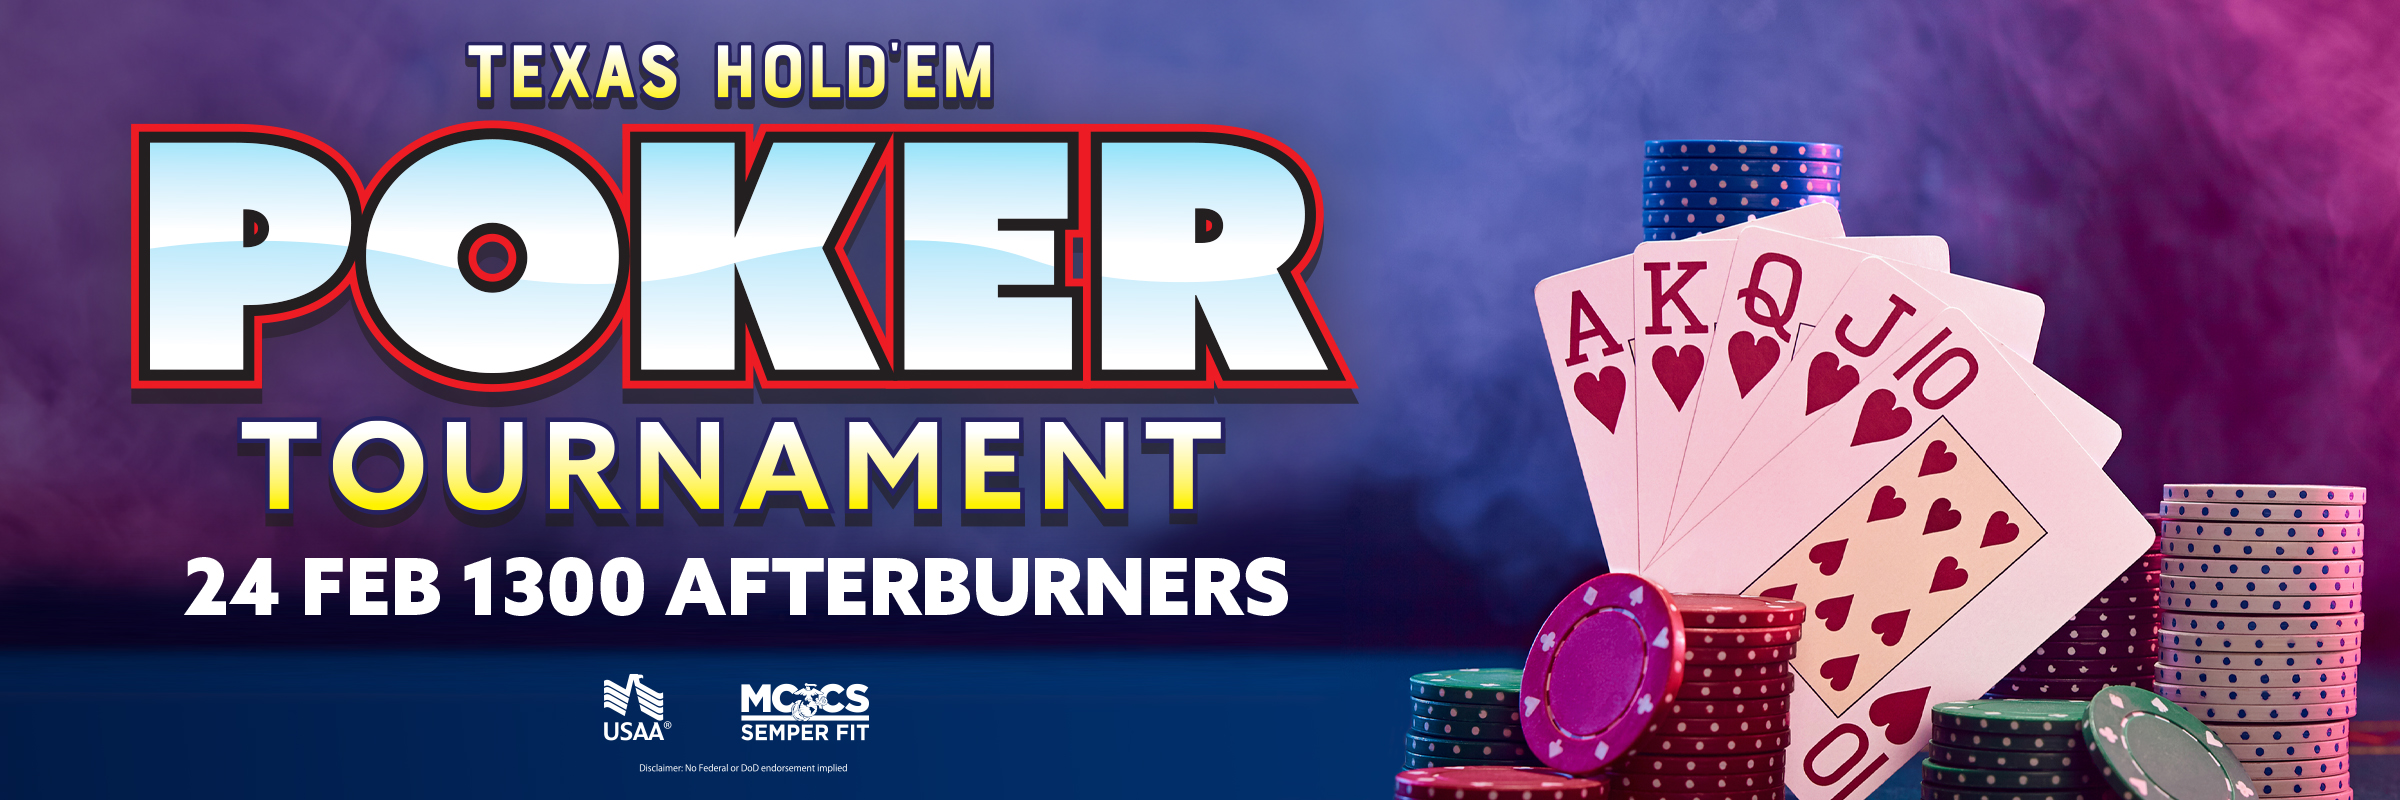 02-24 Poker Tournament_WEB.jpg